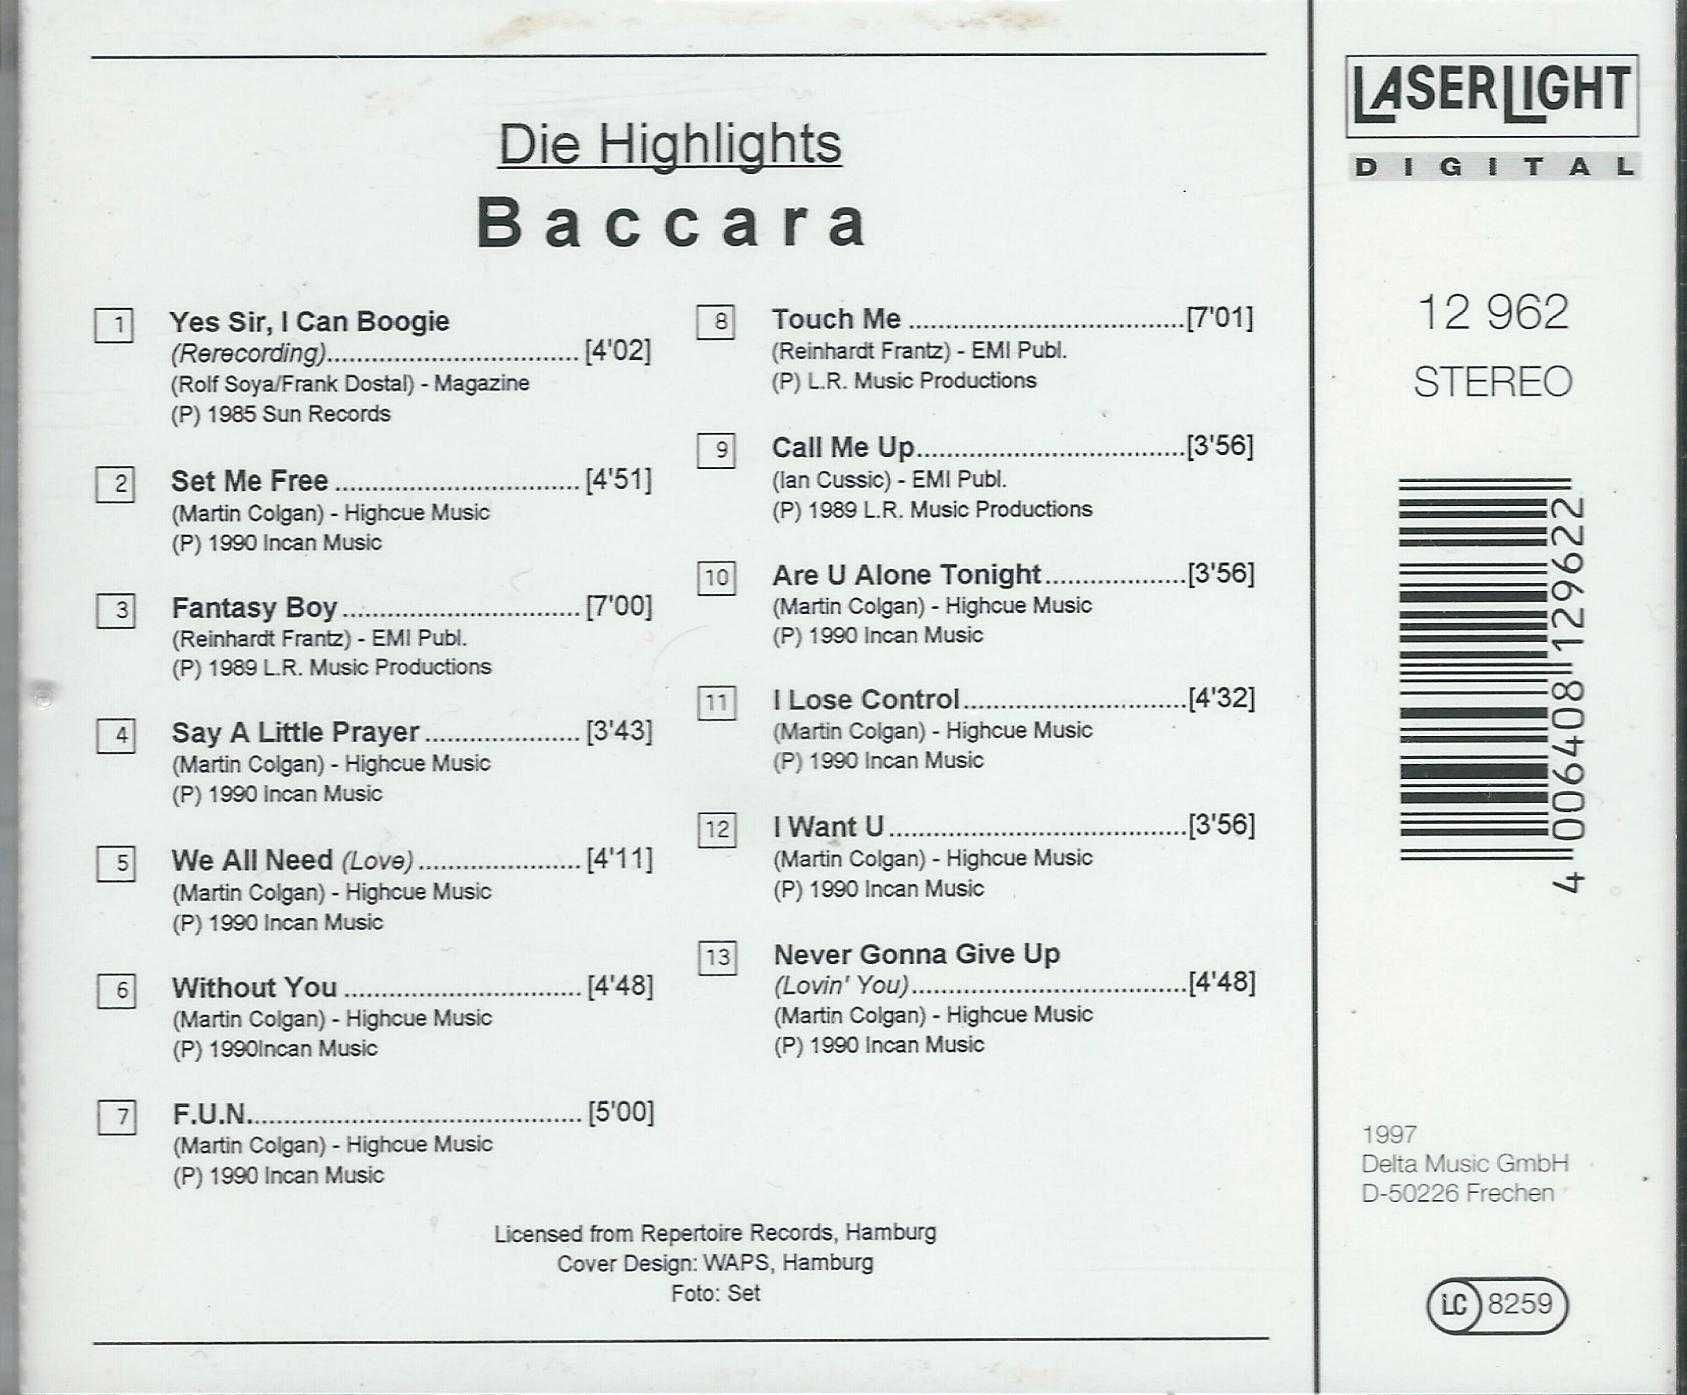 CD Baccara - Die Highlights (1997) (LaserLight Digital)